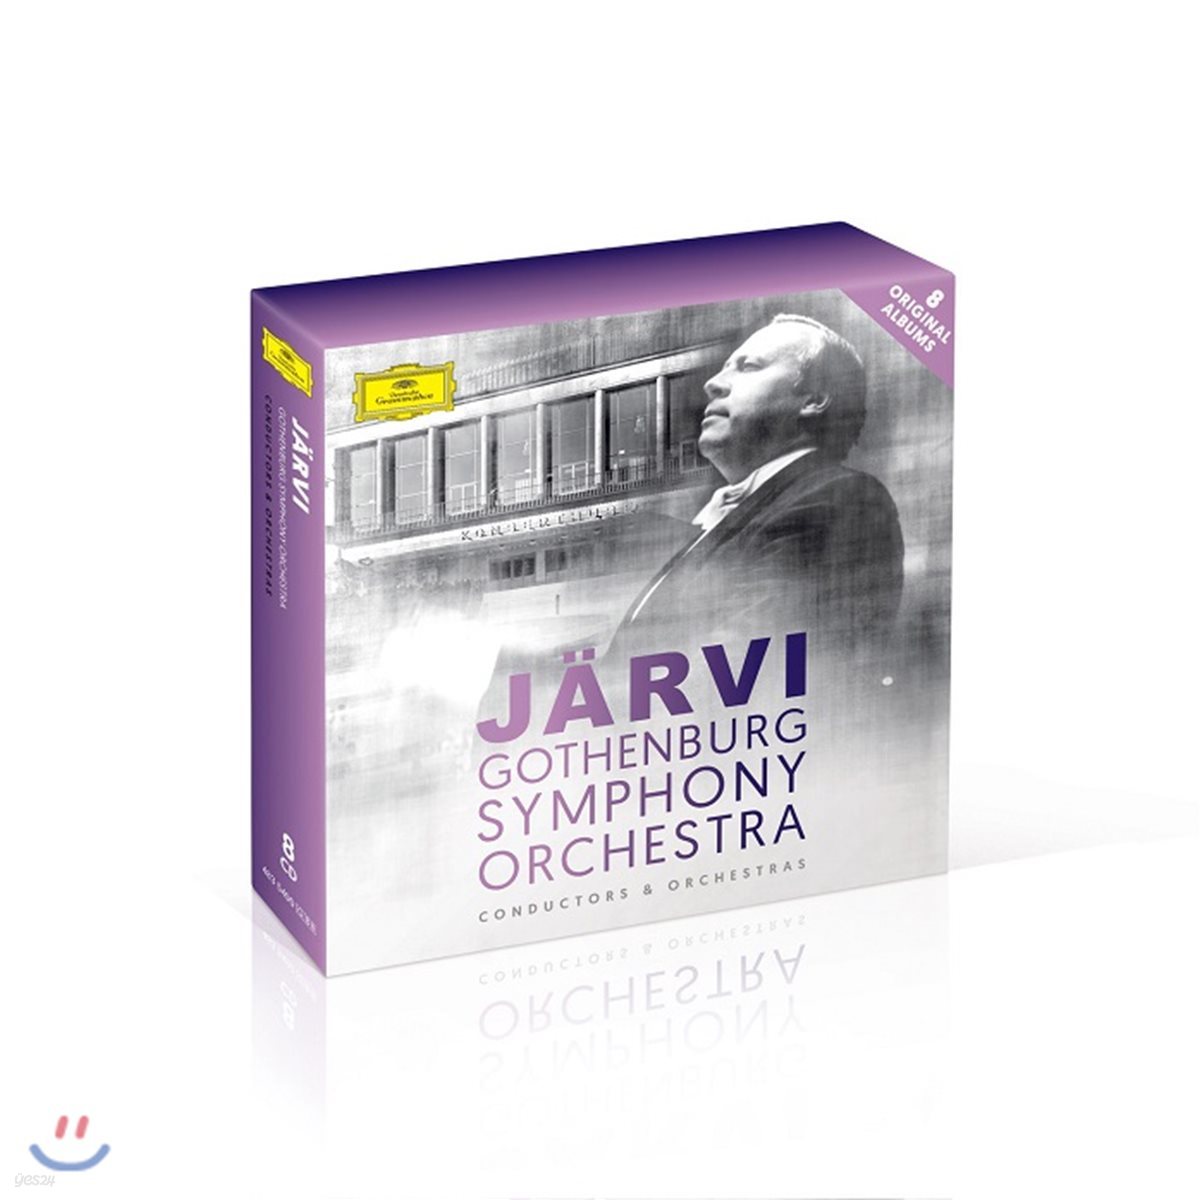 Neeme Jarvi 예르비와 예테보리 심포니의 8개 명반 (Jarvi / Gothenburg Symphony Orchestra Conductors & Orchestras)